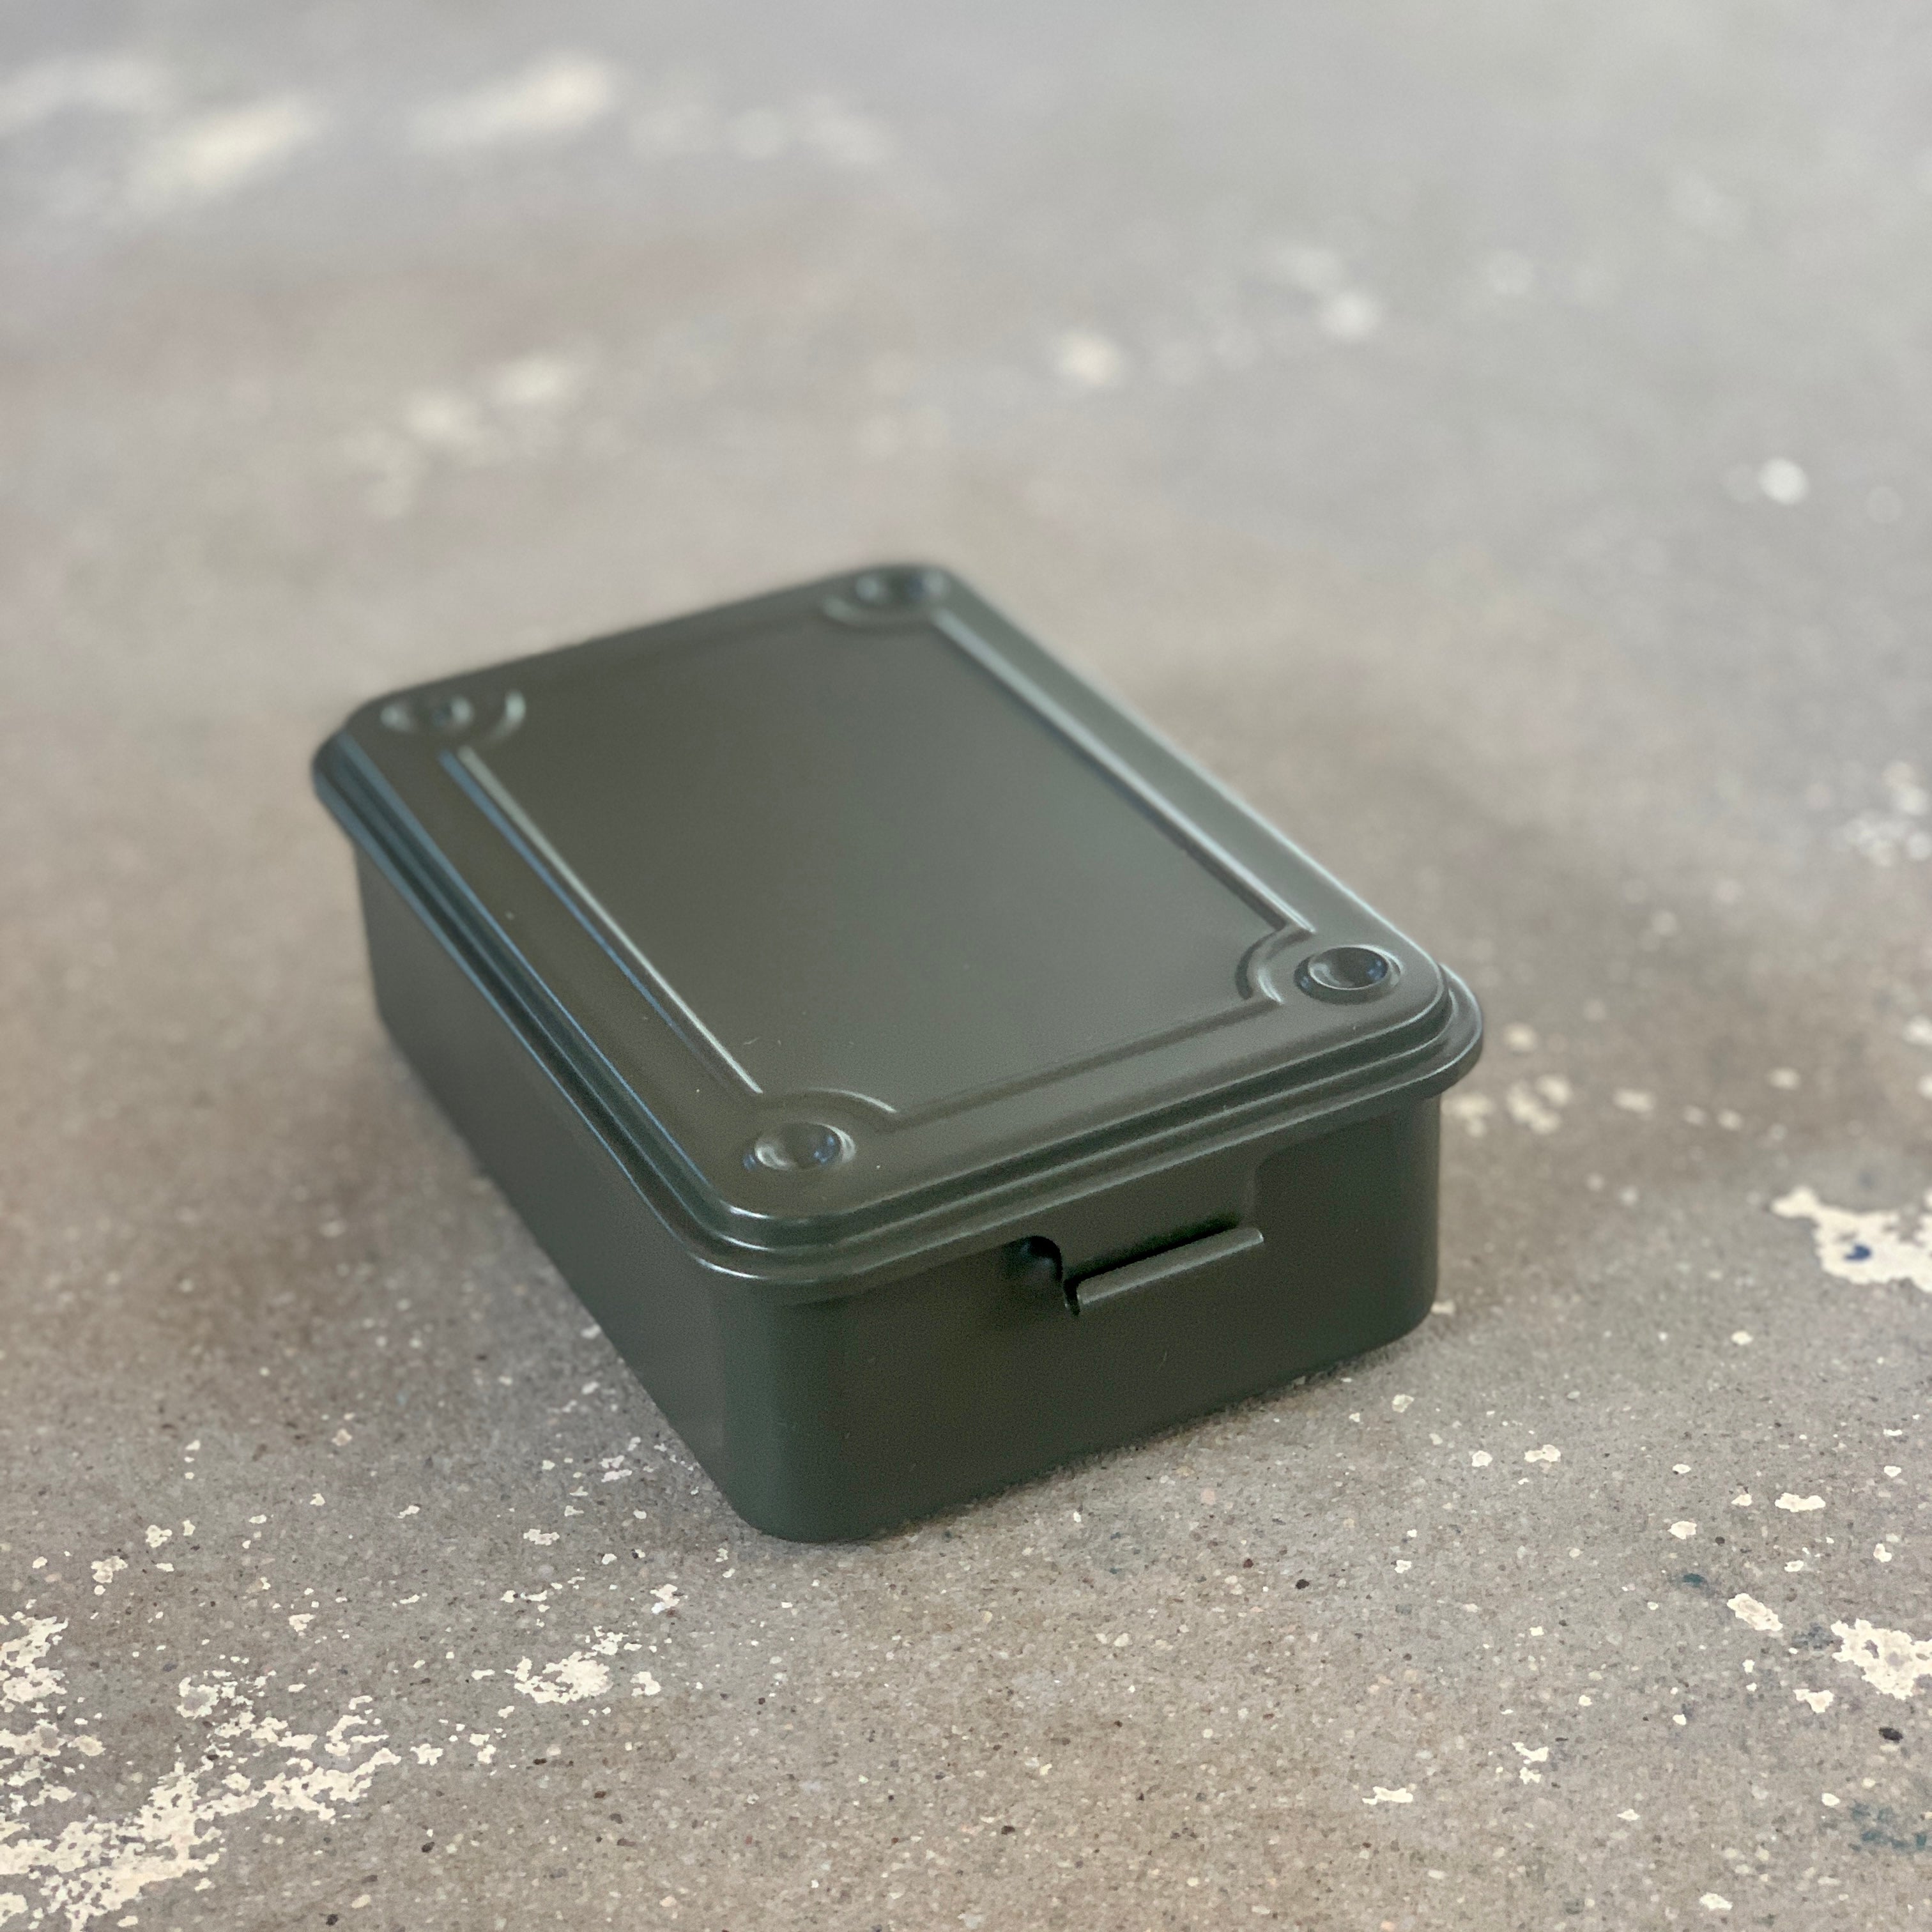 Toyo Steel Stackable Storage Box T-150 - Black